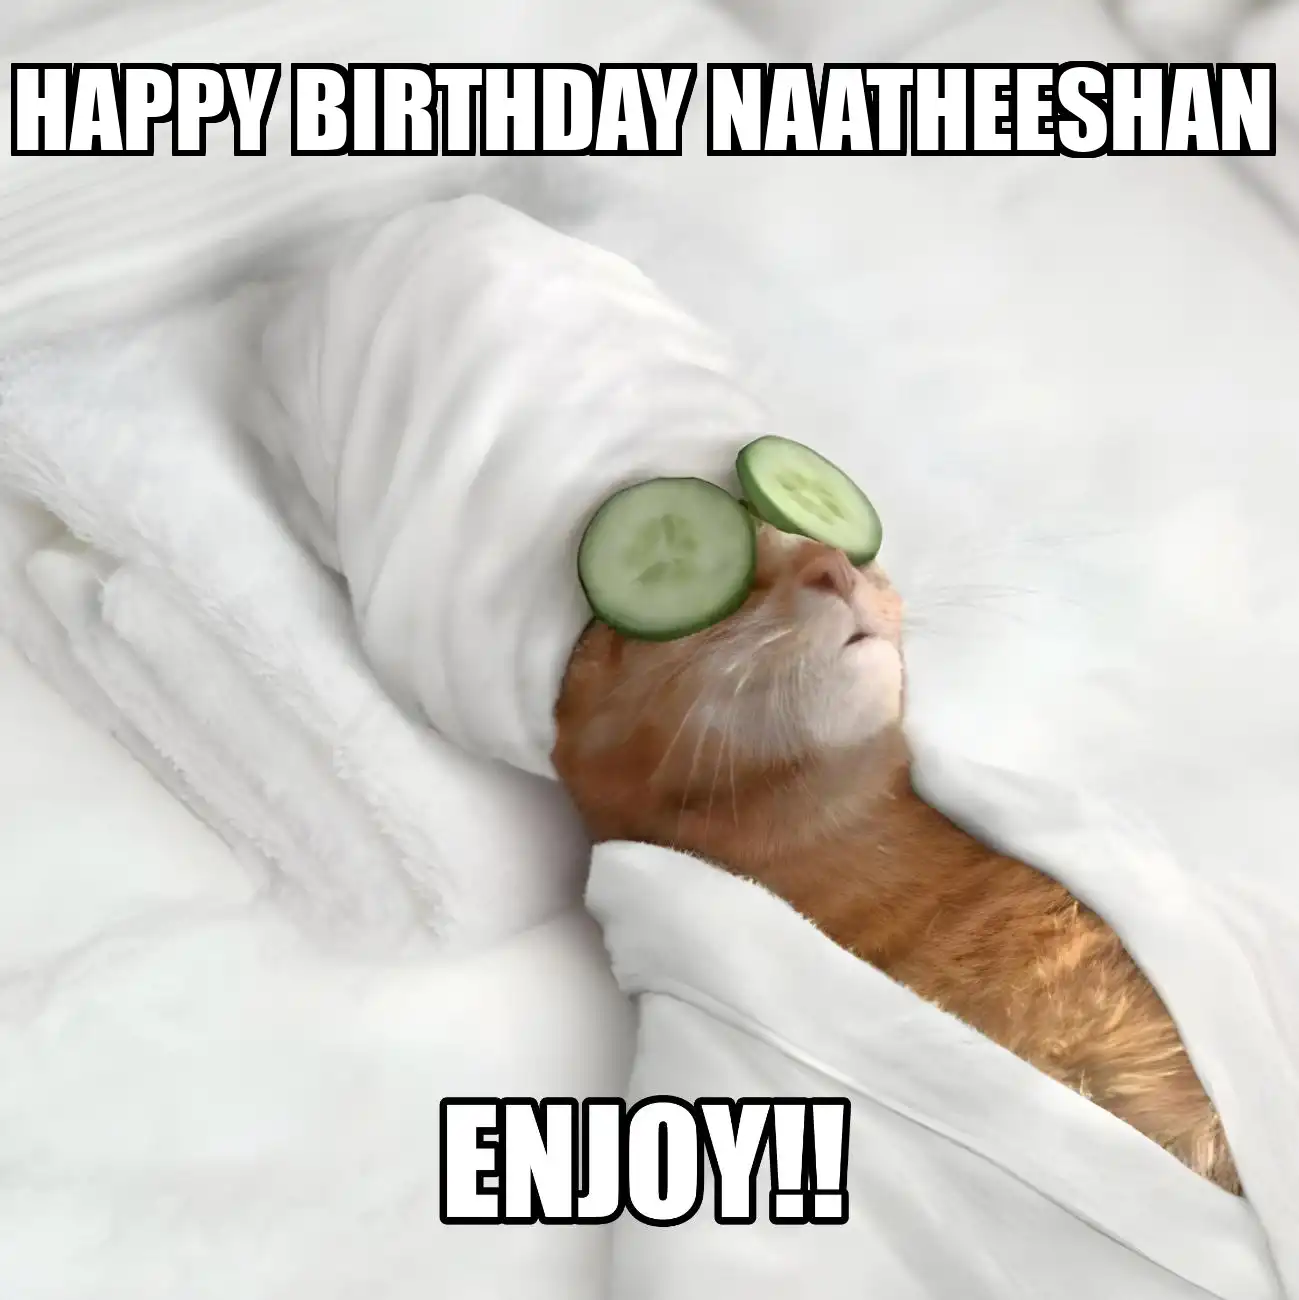 Happy Birthday Naatheeshan Enjoy Cat Meme